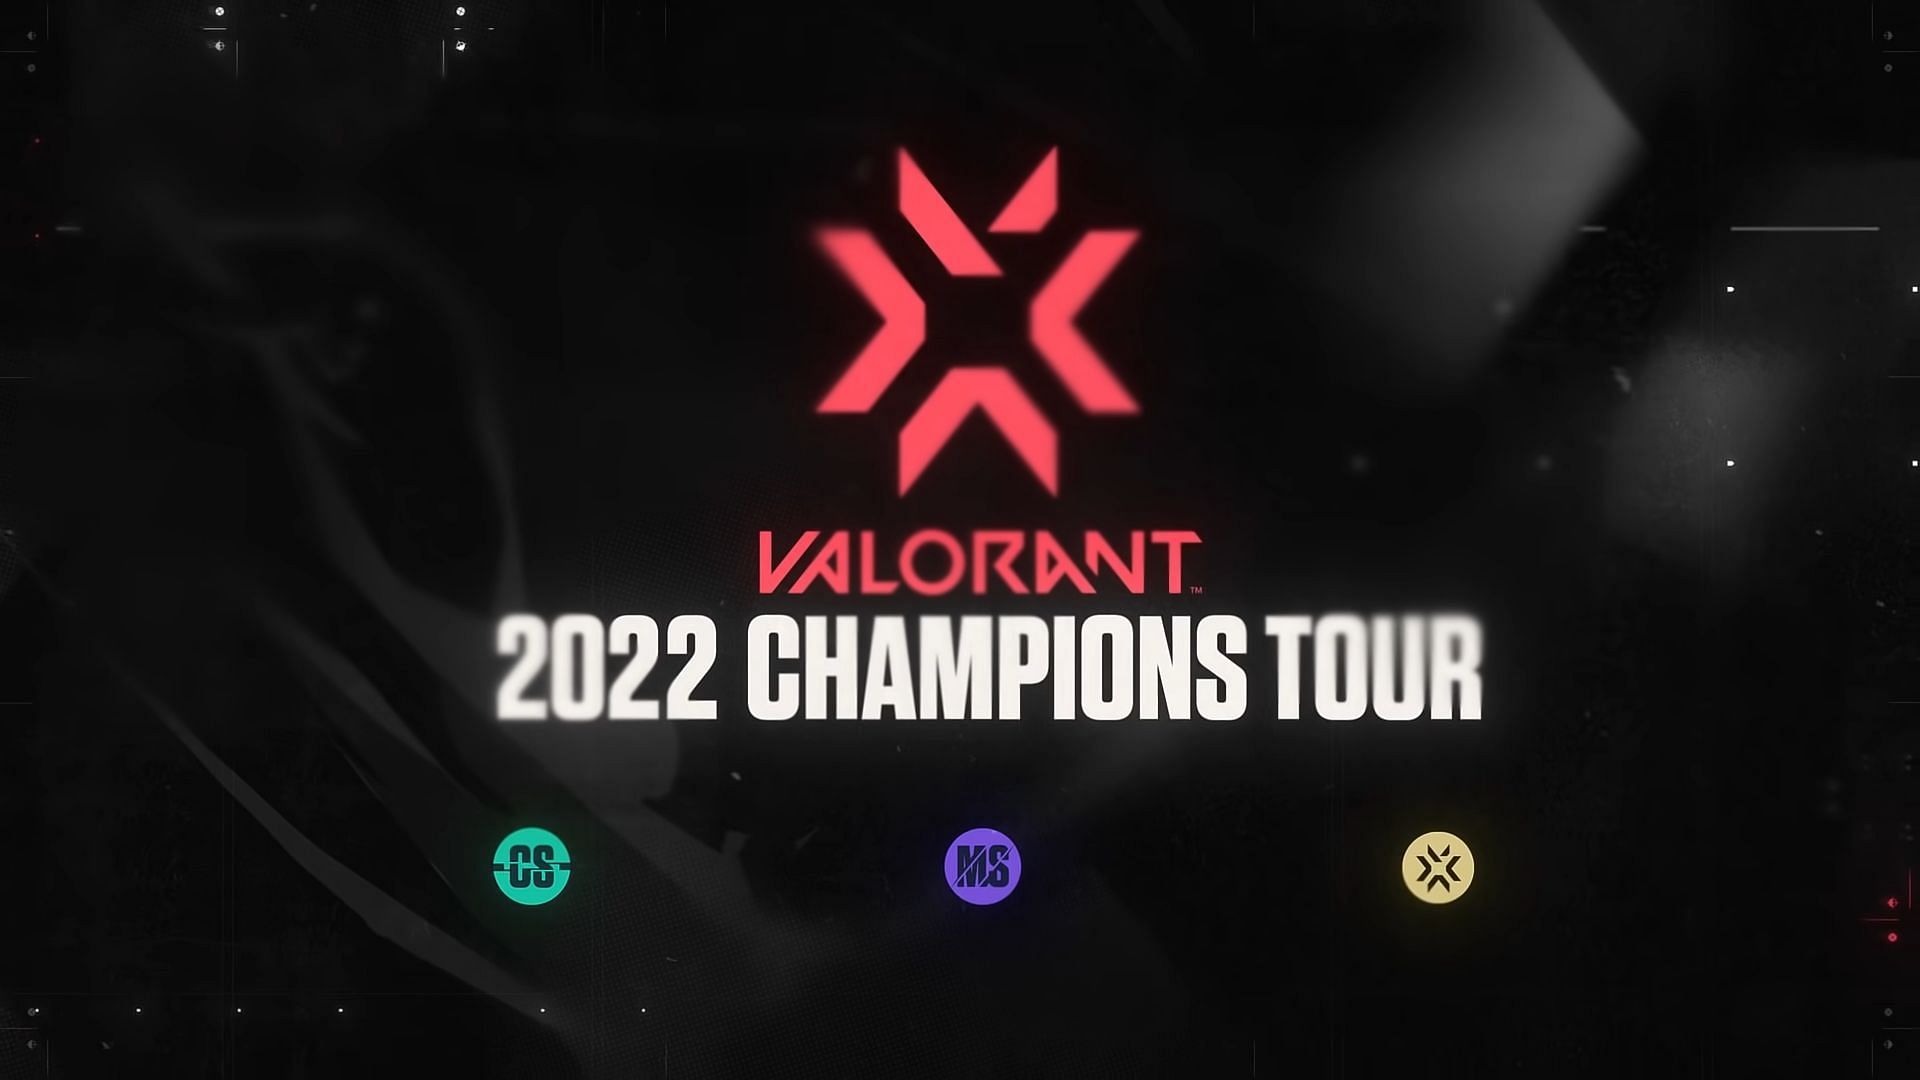 us champions tour schedule